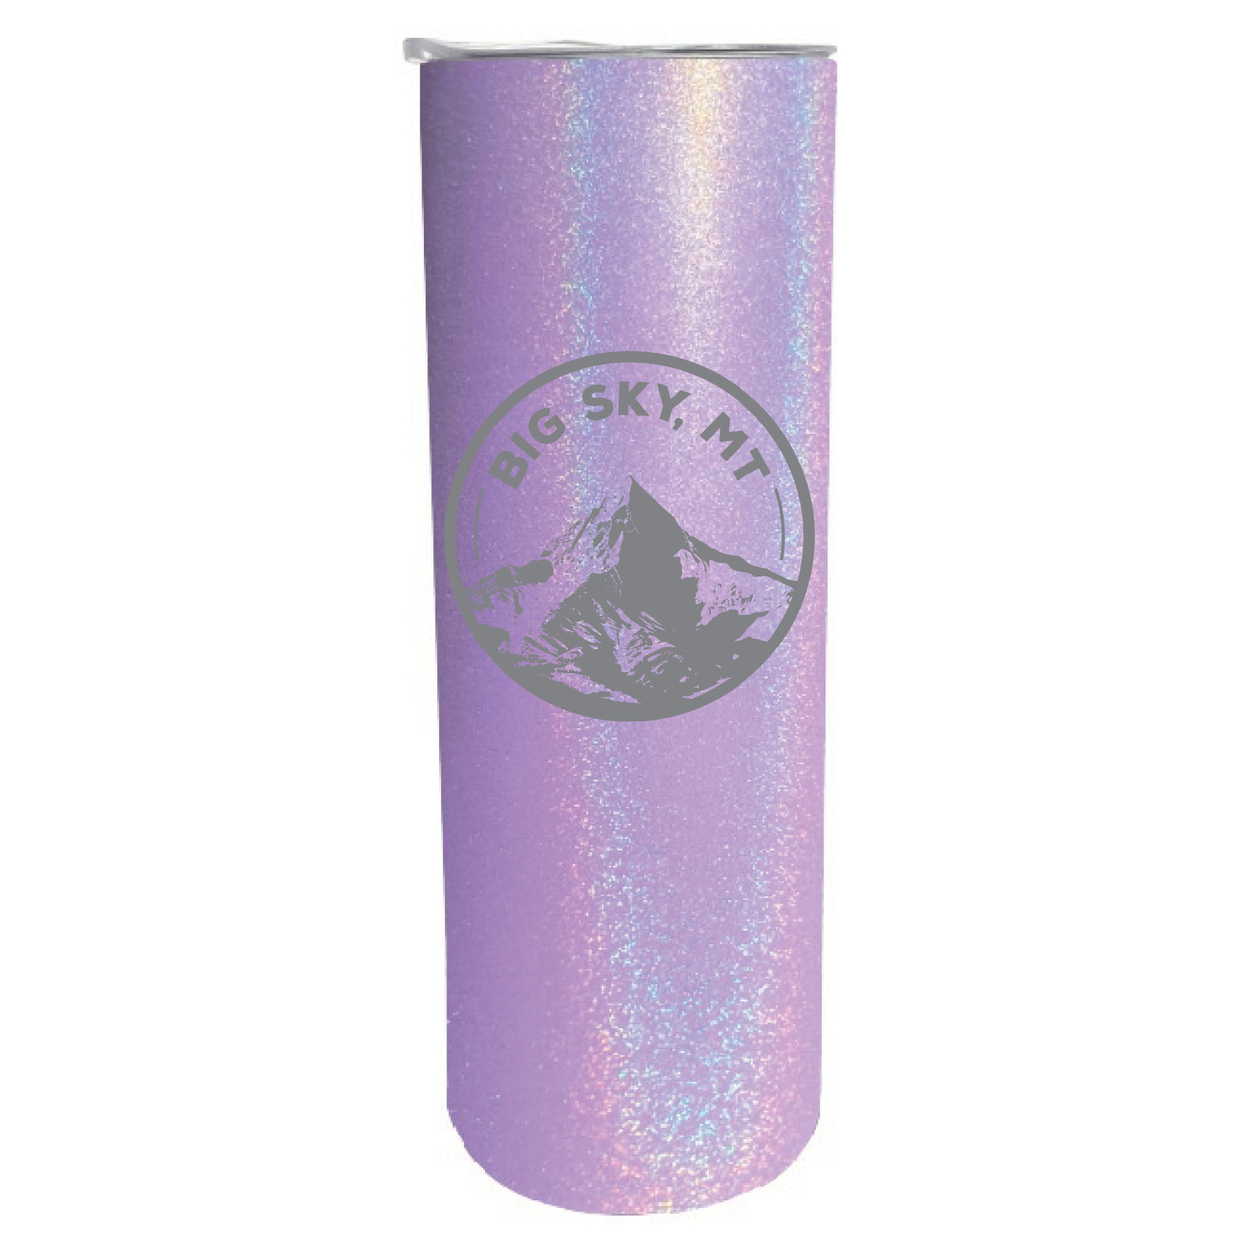 Big Sky Montana Souvenir 20 Oz Engraved Insulated Stainless Steel Skinny Tumbler - Purple Glitter,,Single Unit